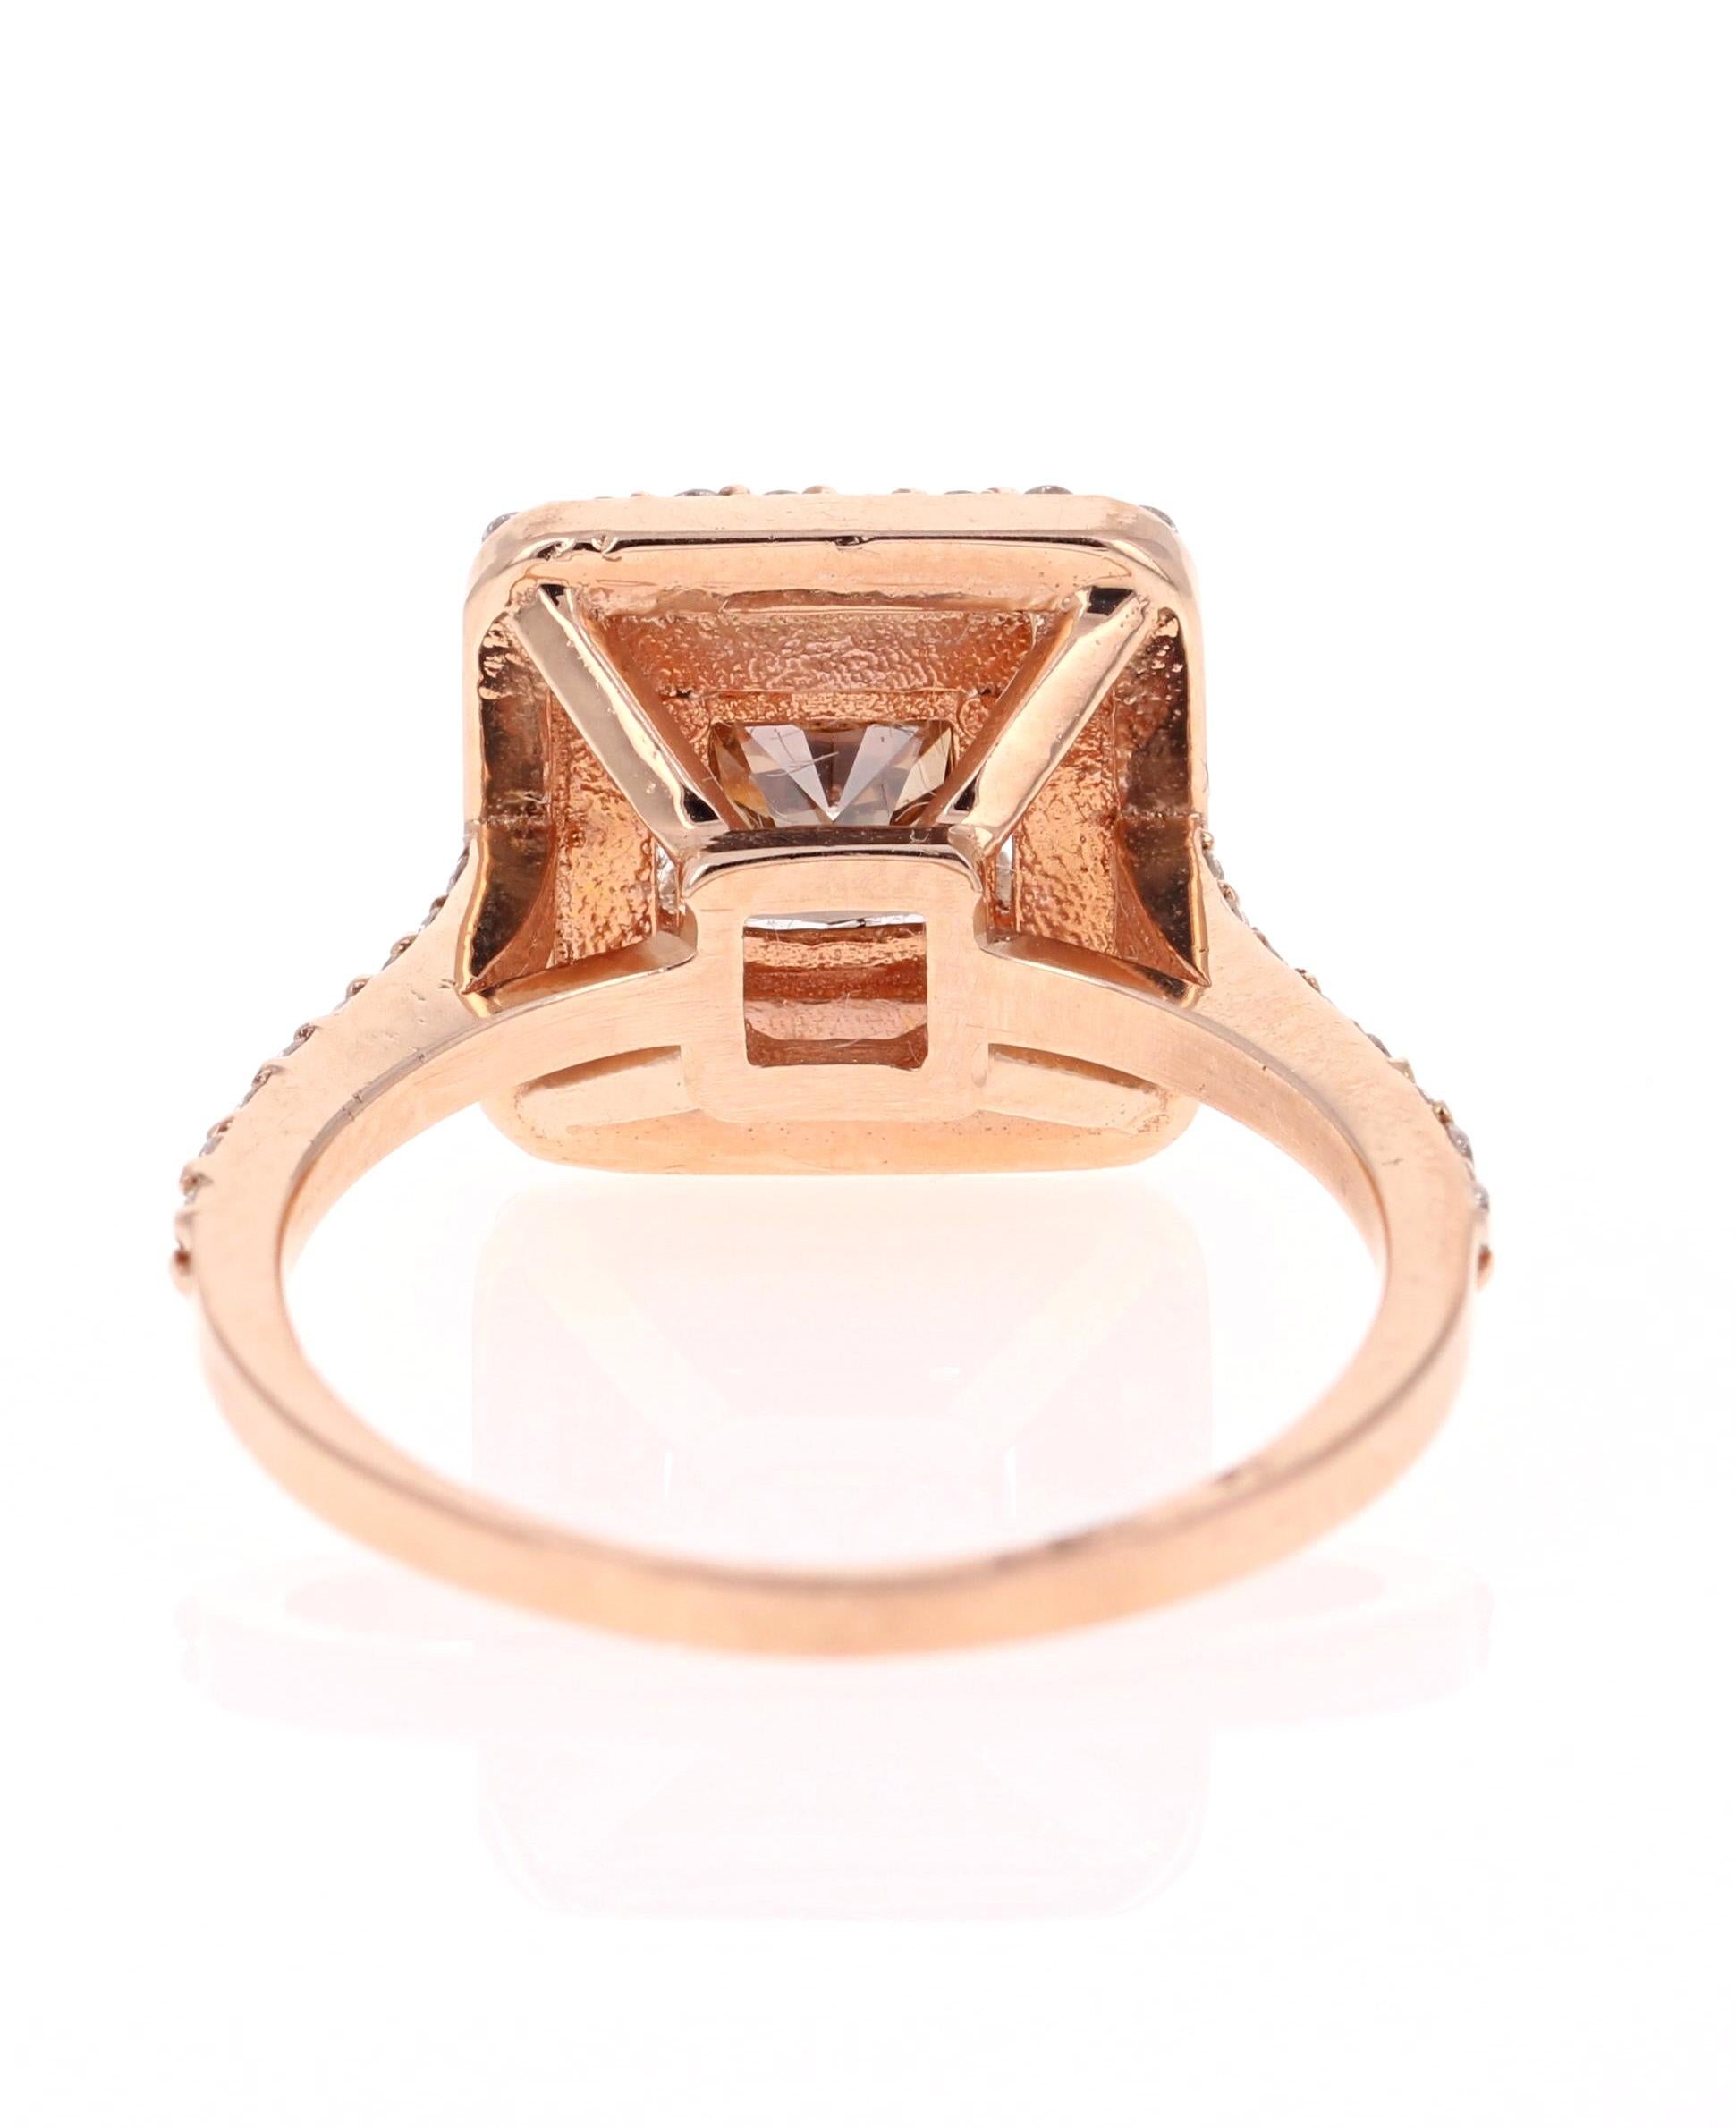 Cushion Cut 1.73 Carat Natural Fancy Brown Diamond Engagement Ring 14 Karat Rose Gold For Sale